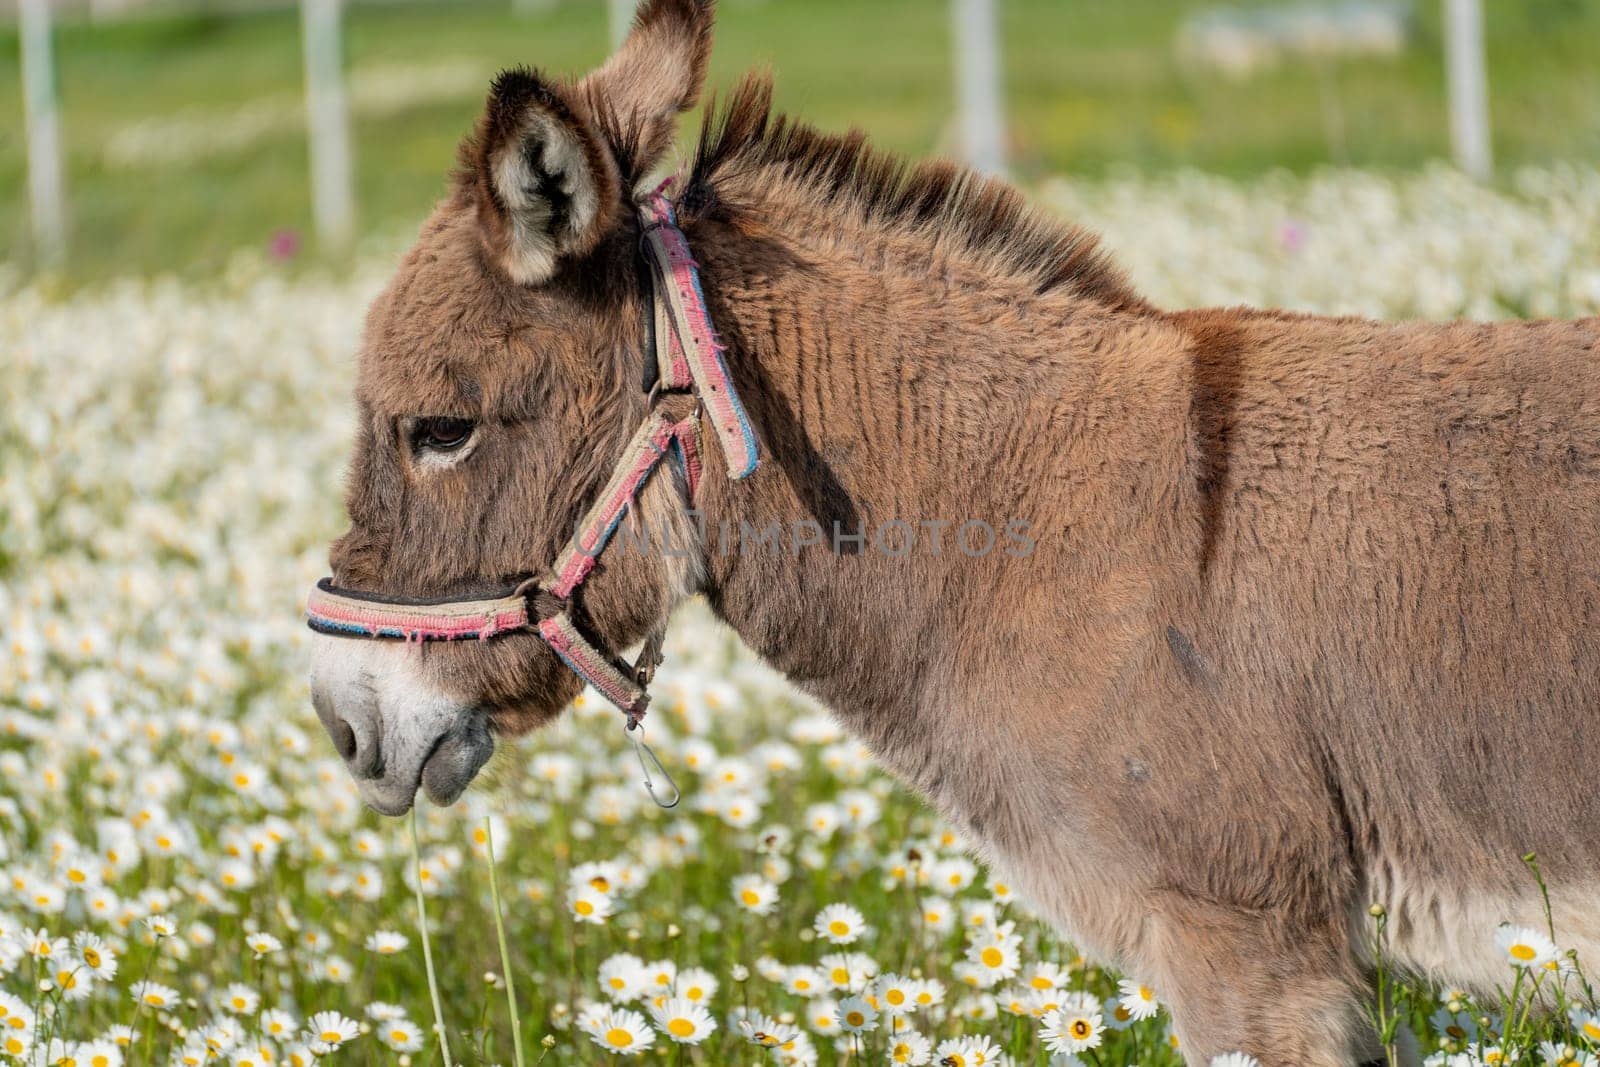 Donkey daisies field among flowering daisies by Matiunina